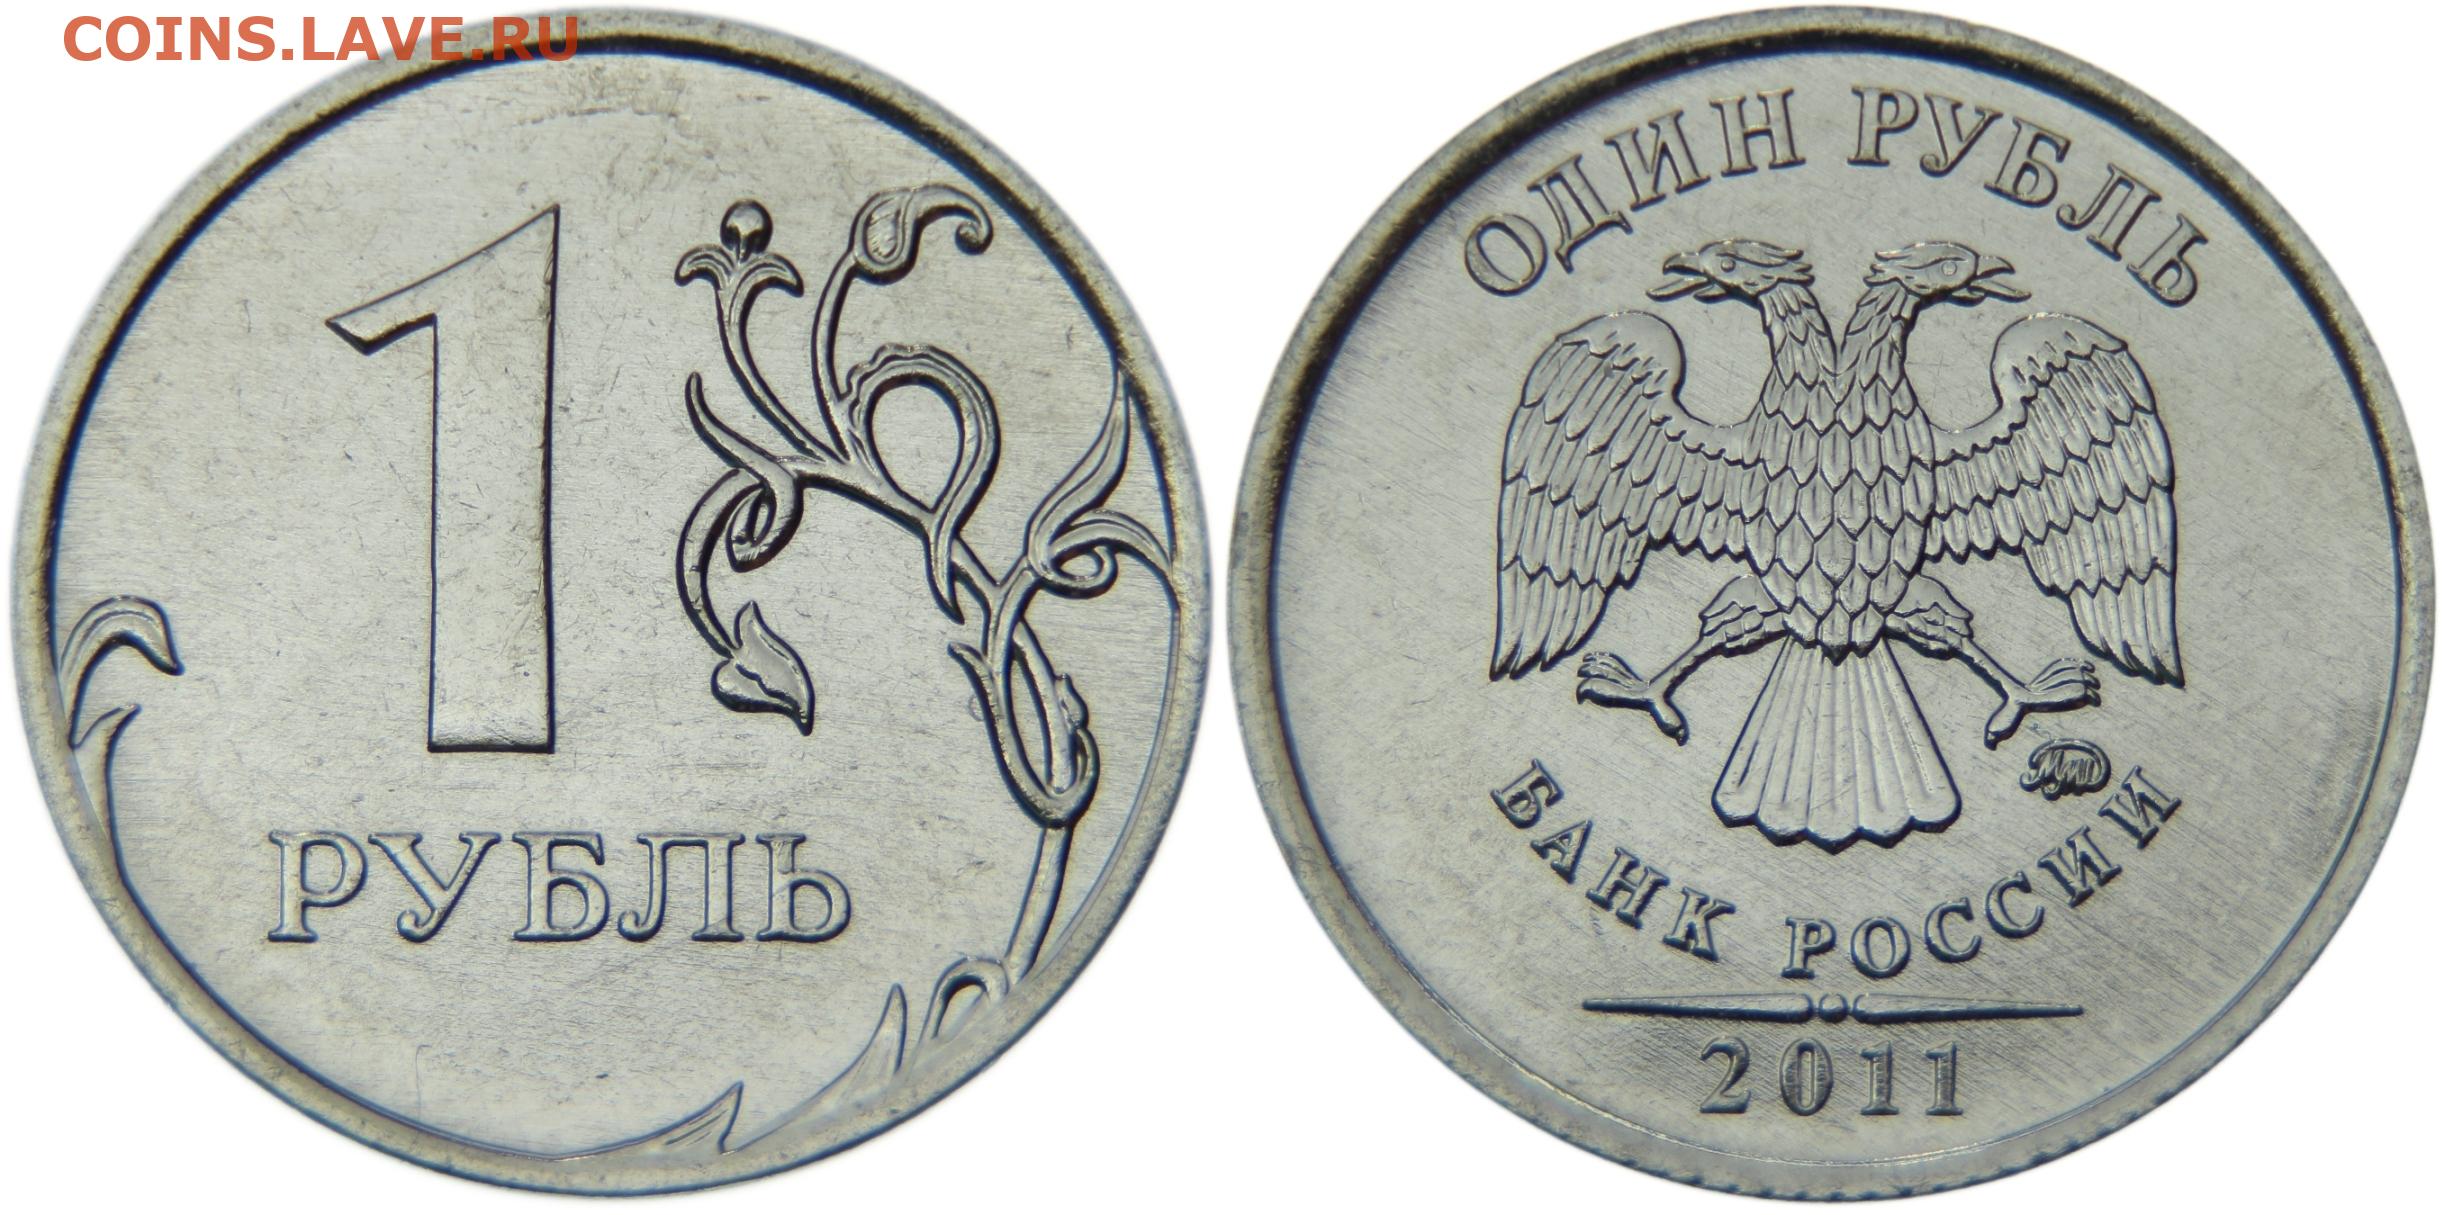 Ира рубль. Монета 1 рубль. Монеты России 1 рубль. Монеты 1 2 5 10 рублей. Монеты 5 и 10 рублей.